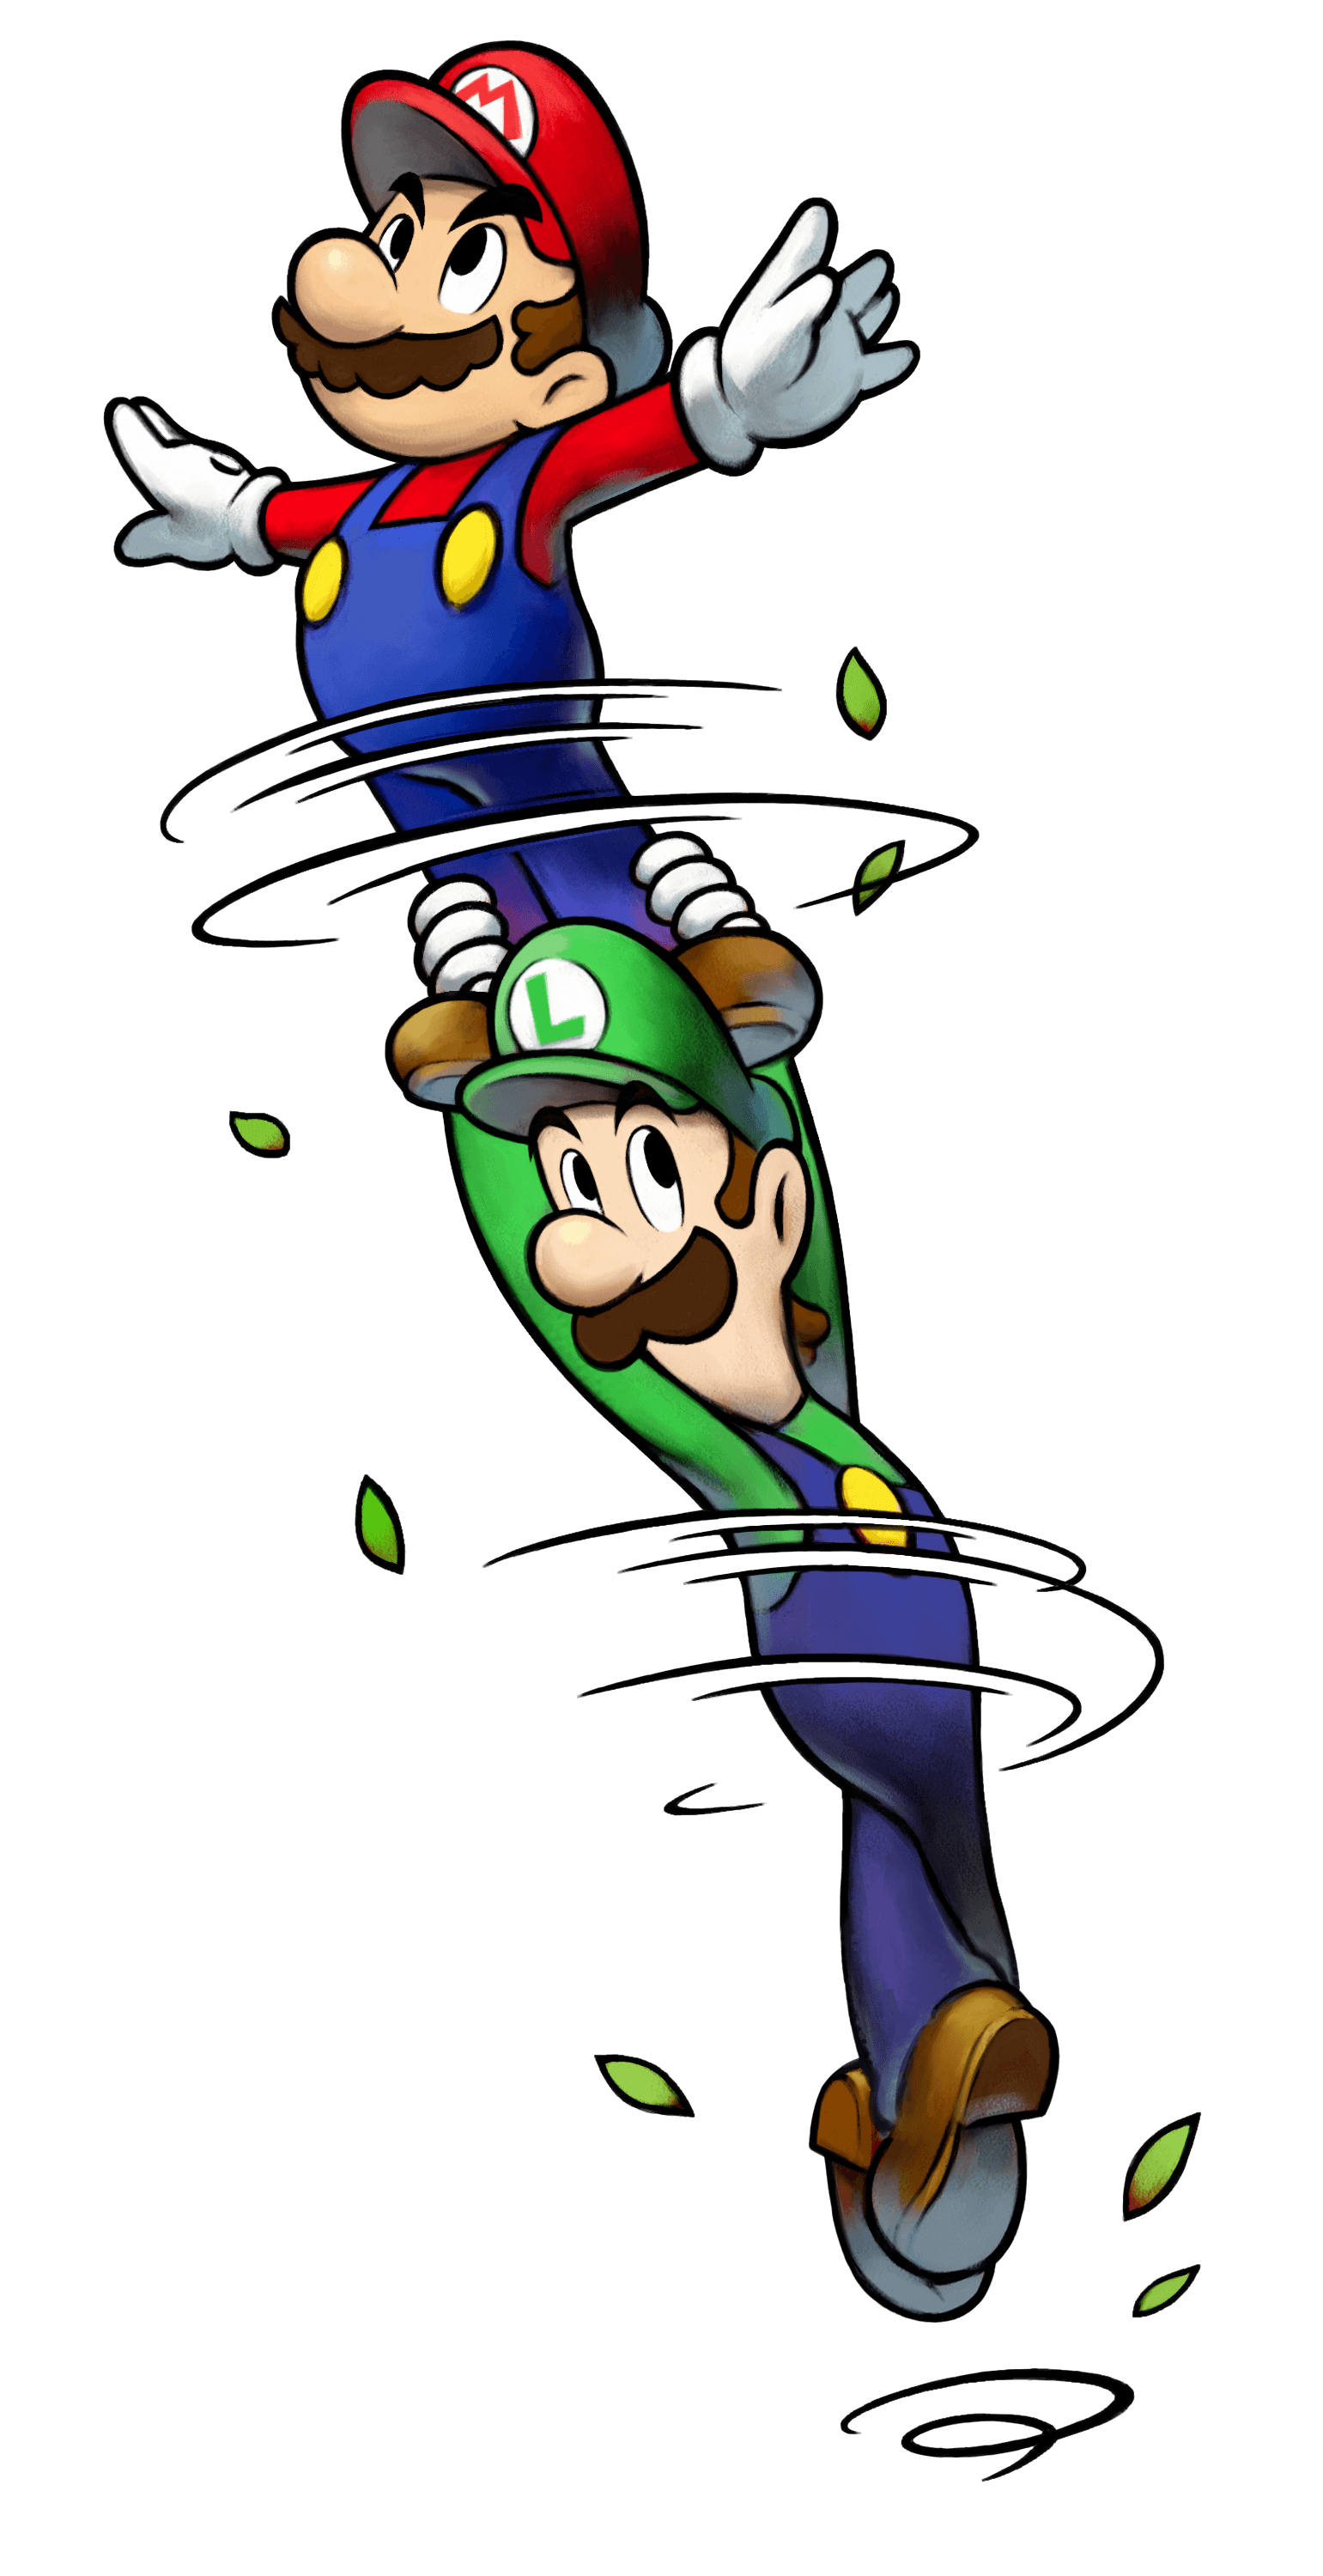 Mario & Luigi Bowser's Inside Story plus Bowser Jr's Journey